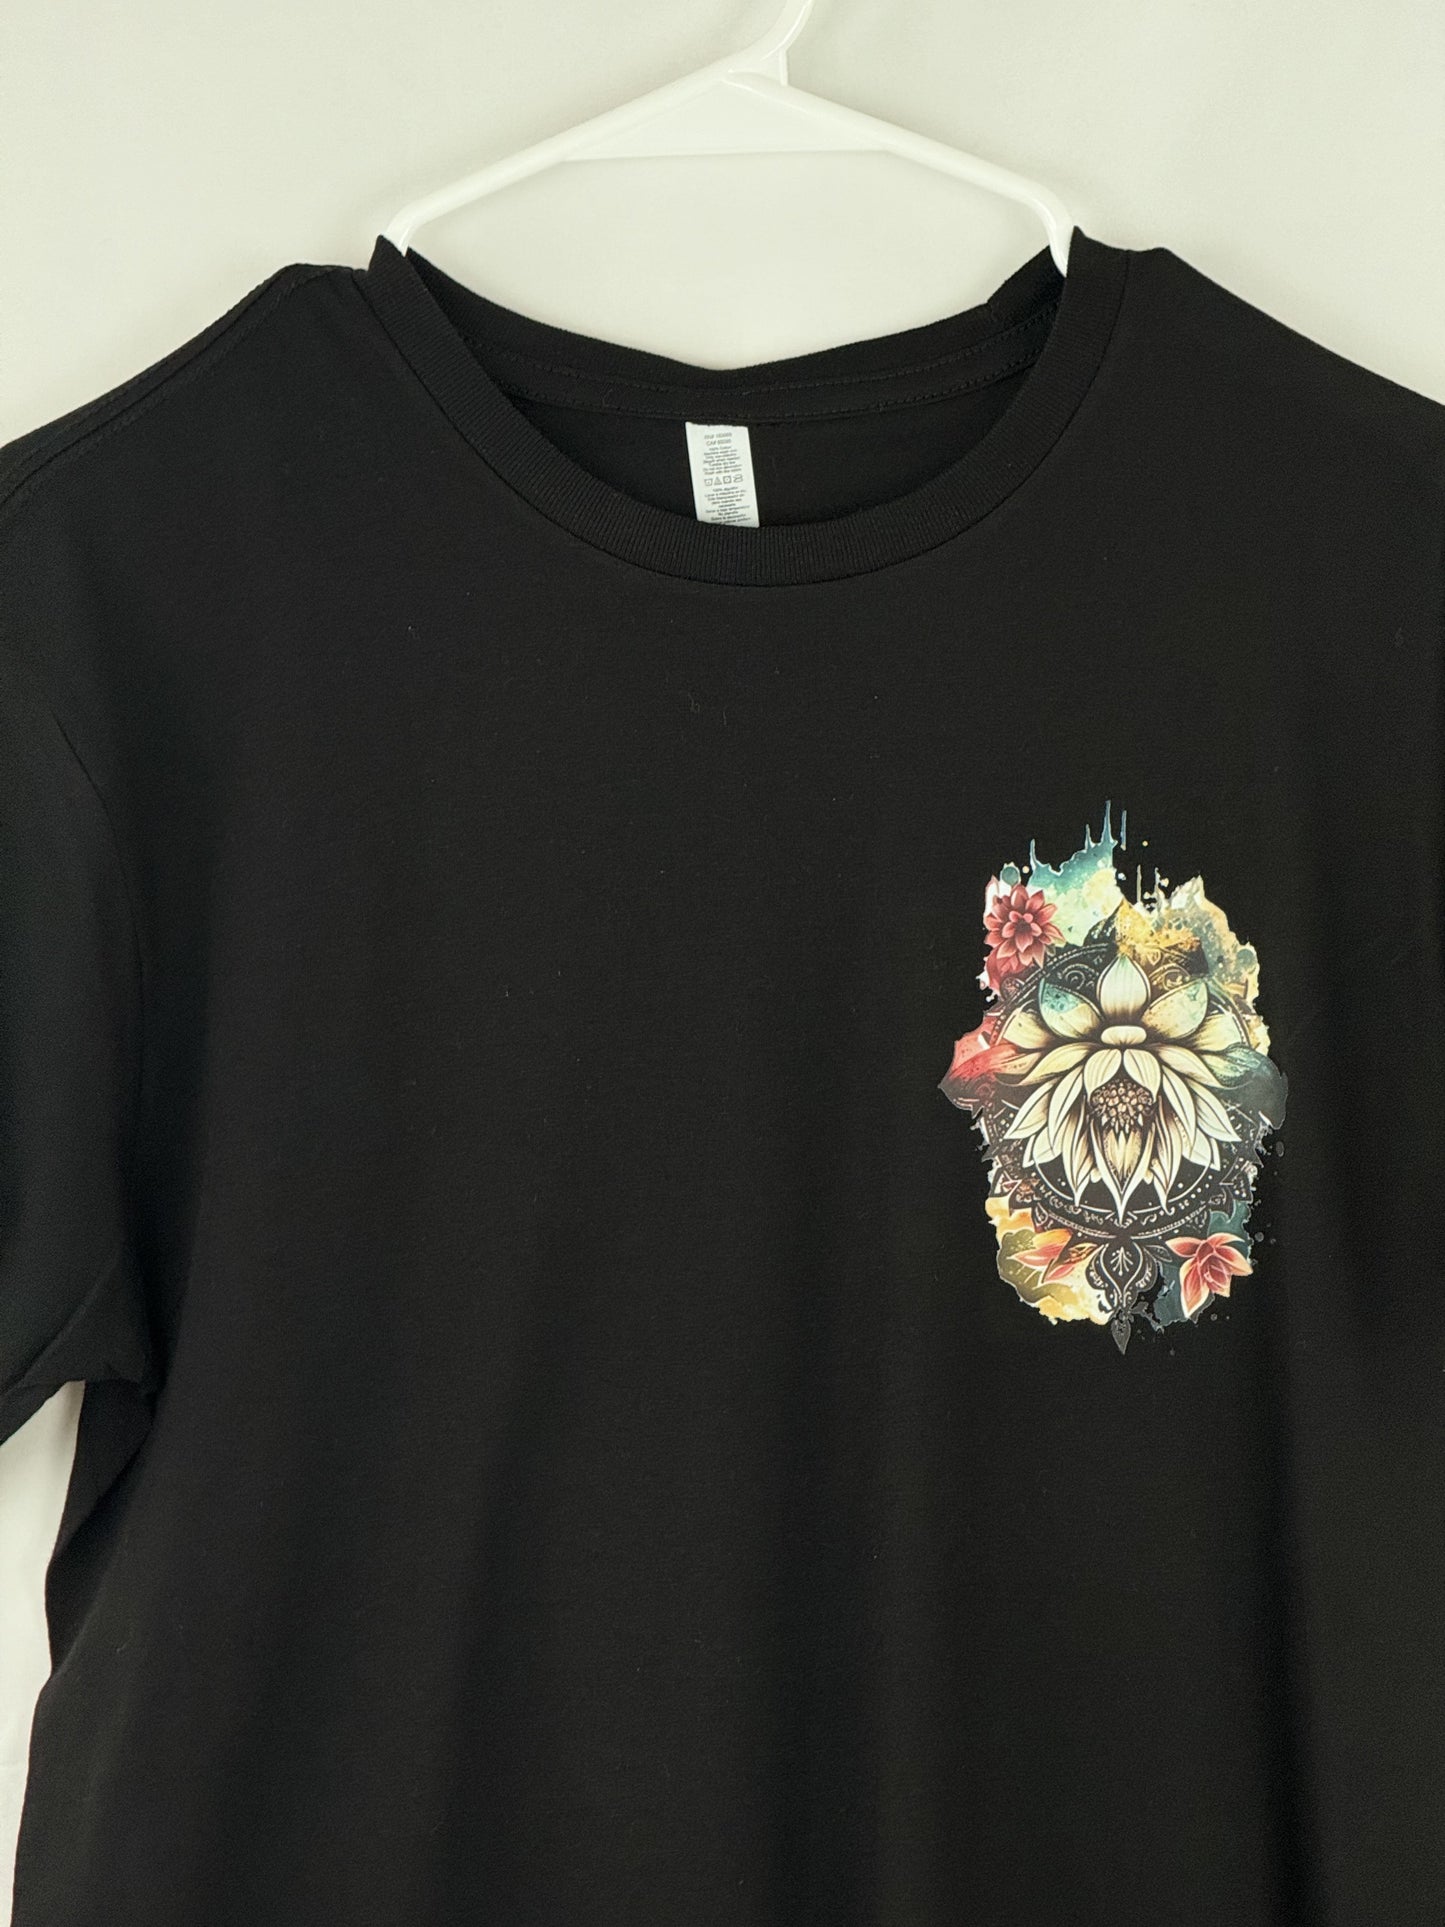 Floral Emblem Graphic T-Shirt - Nature's Artistry